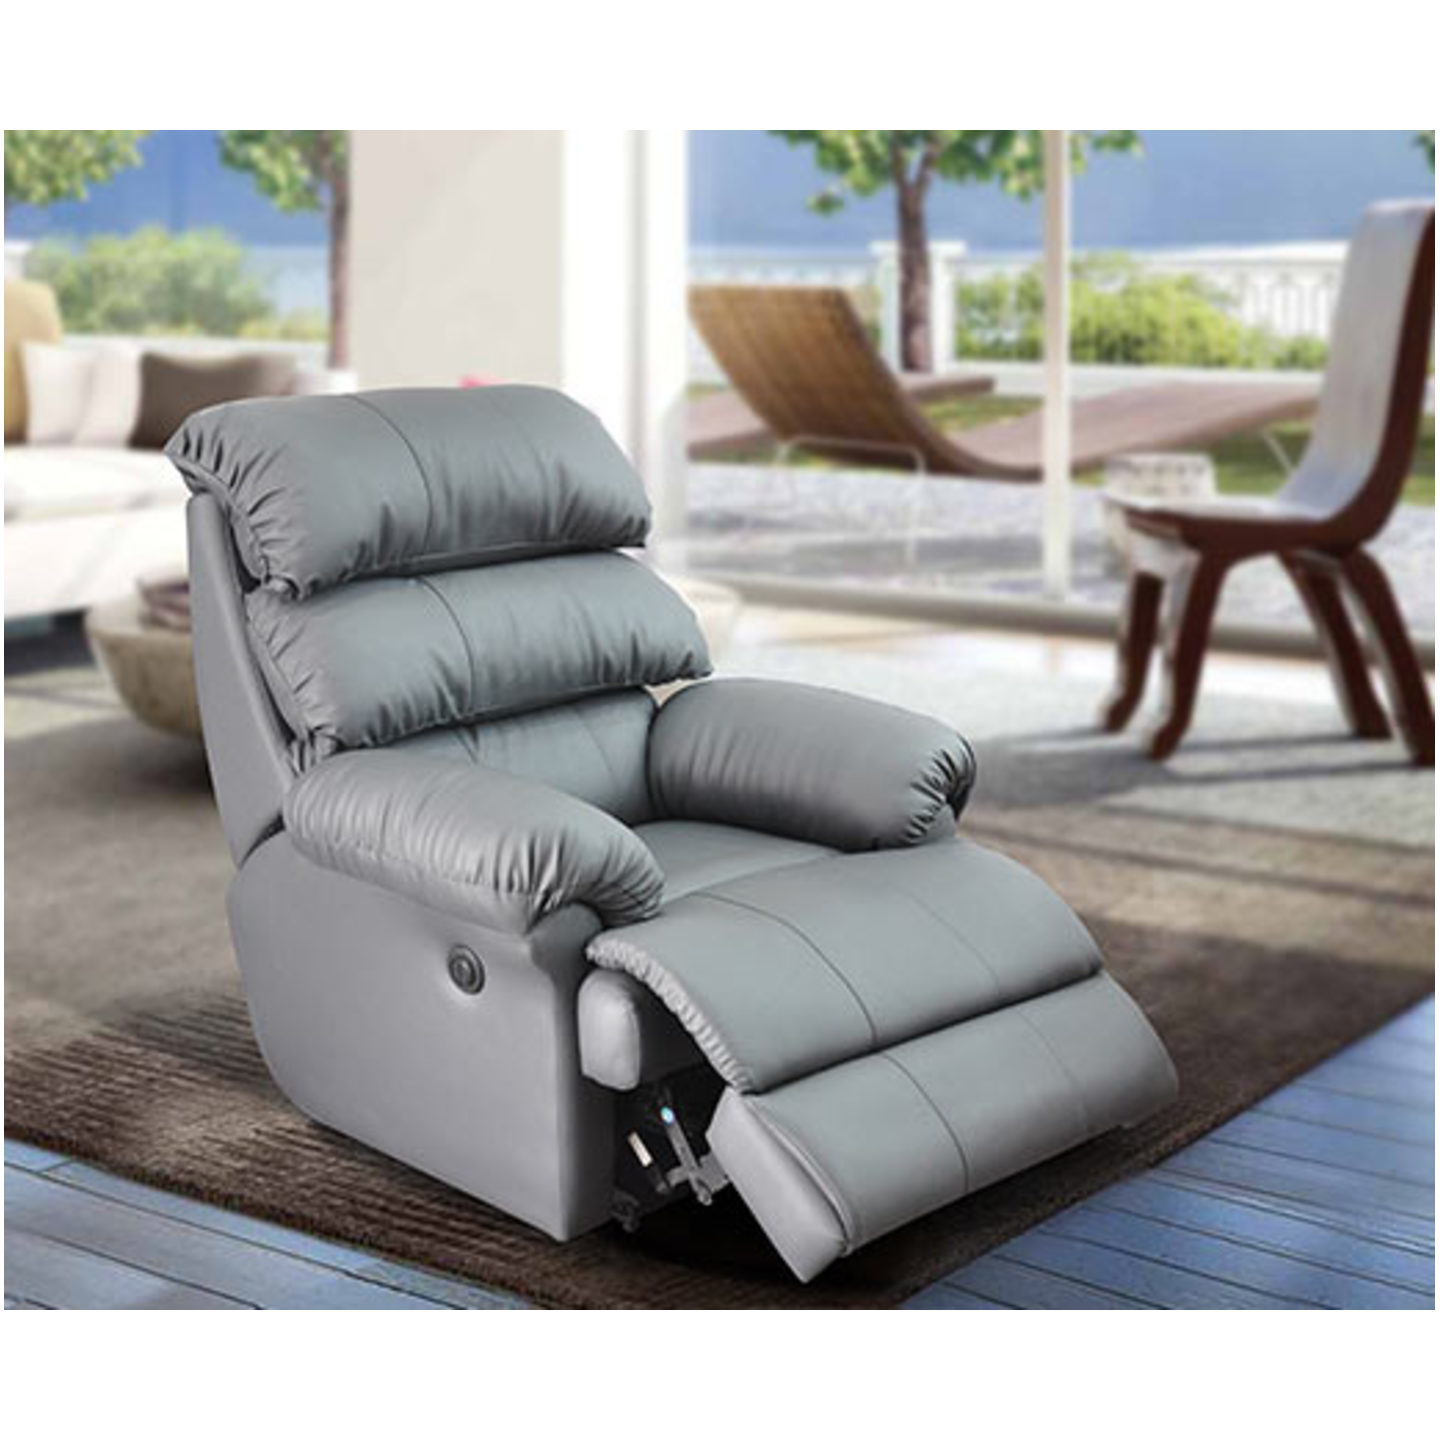 LN Recliner Chair Otium Manual System In Grey Colour